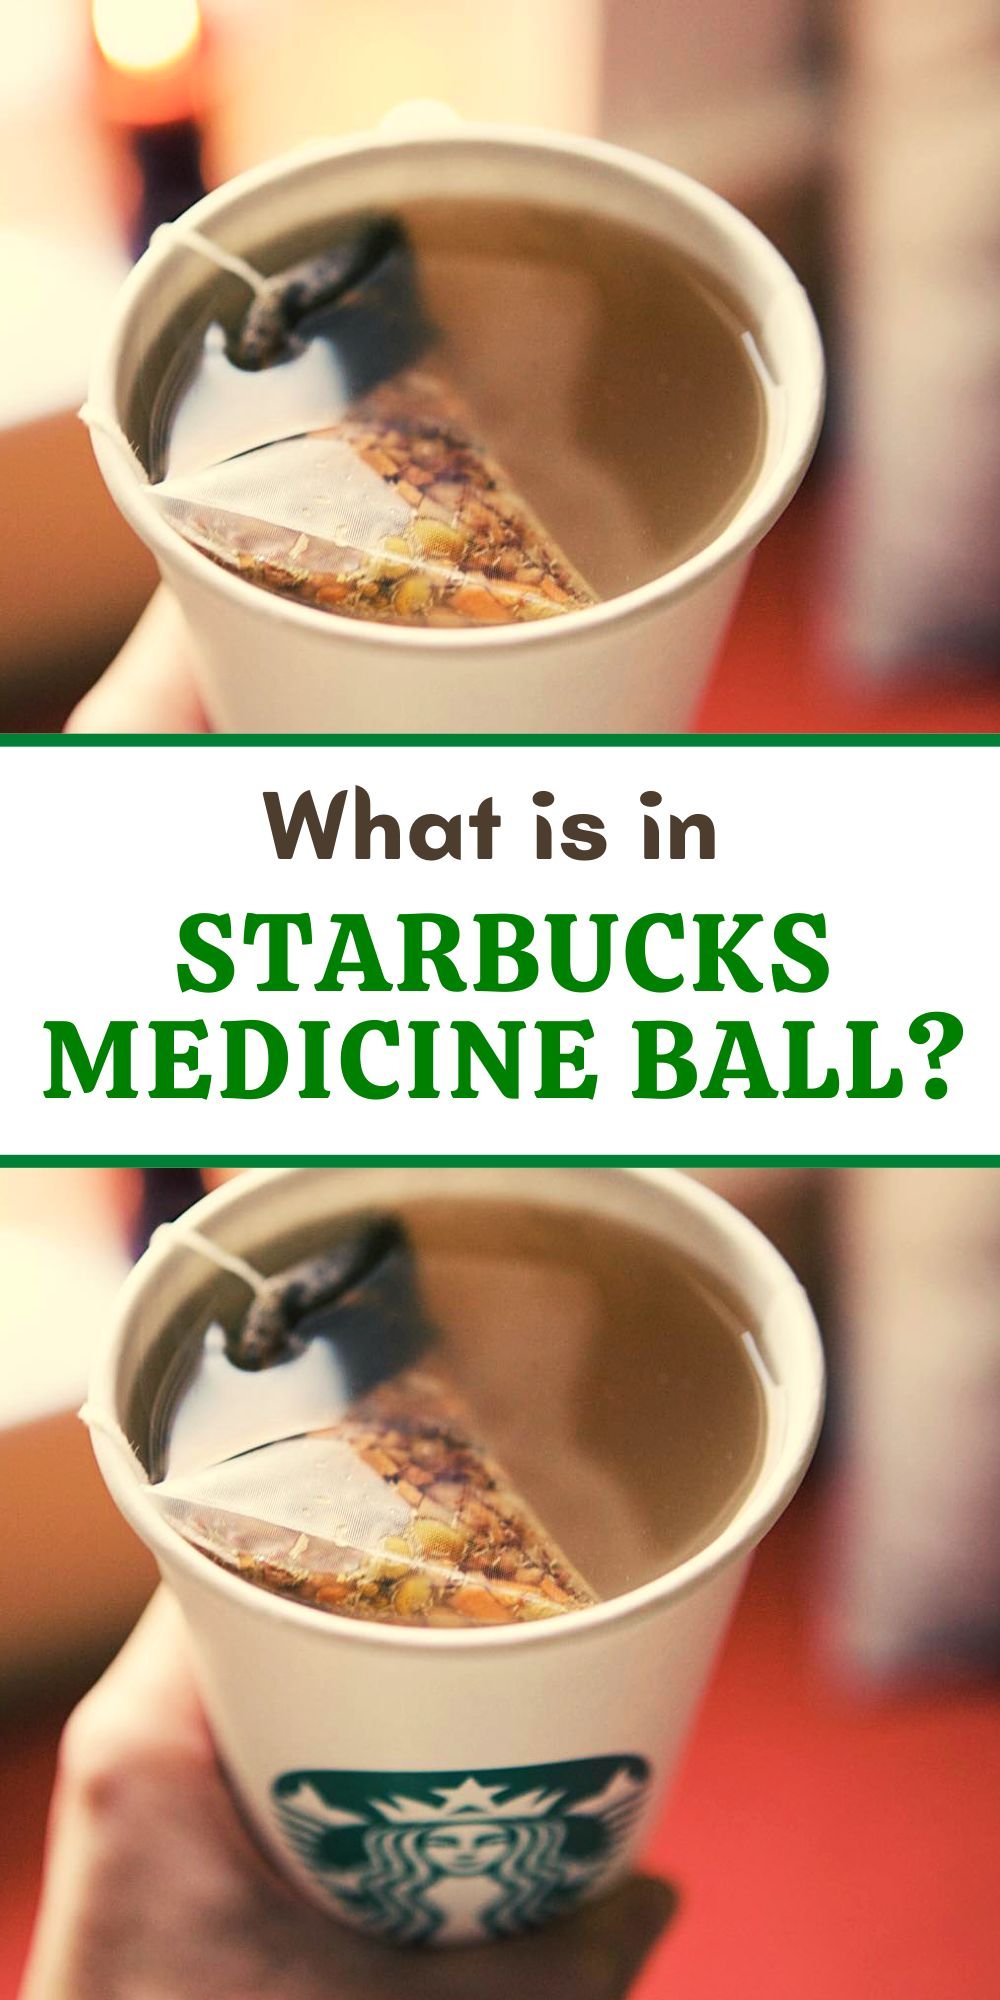 Starbucks Medicine Ball